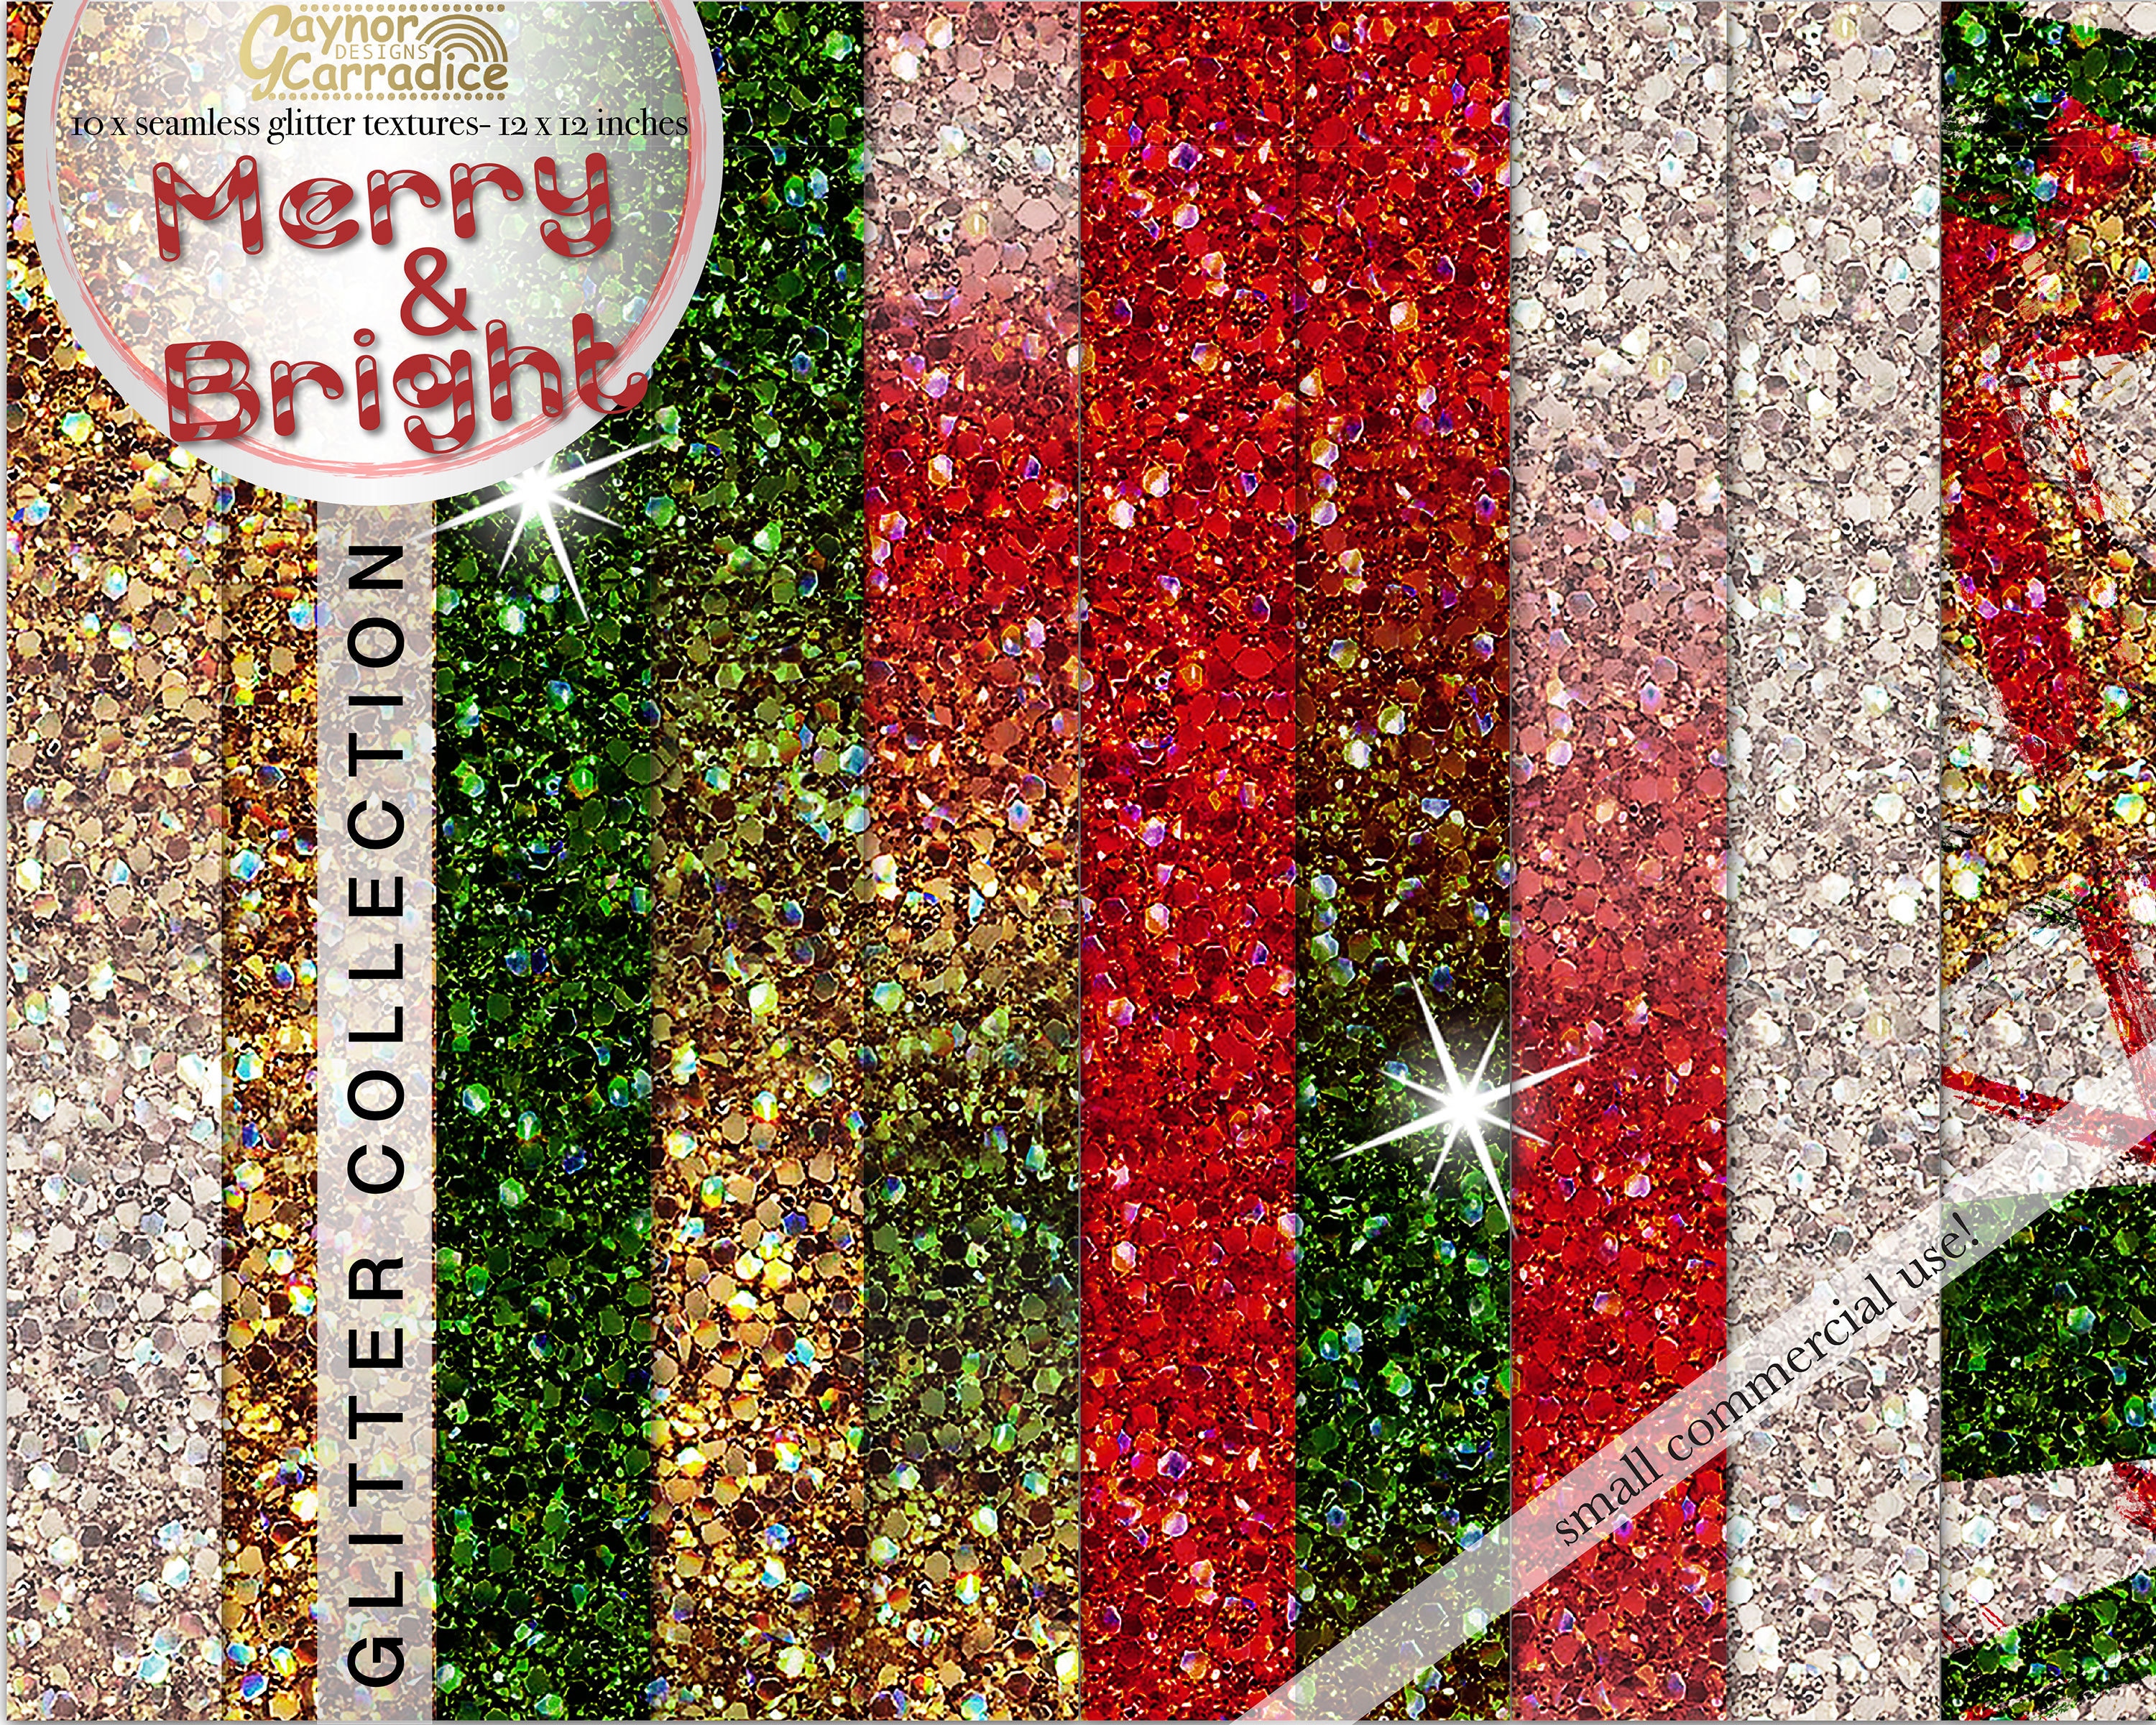 Texture Sparkle Sparkling Glitter Wallpaper For A Festive Celebration  Backgrounds